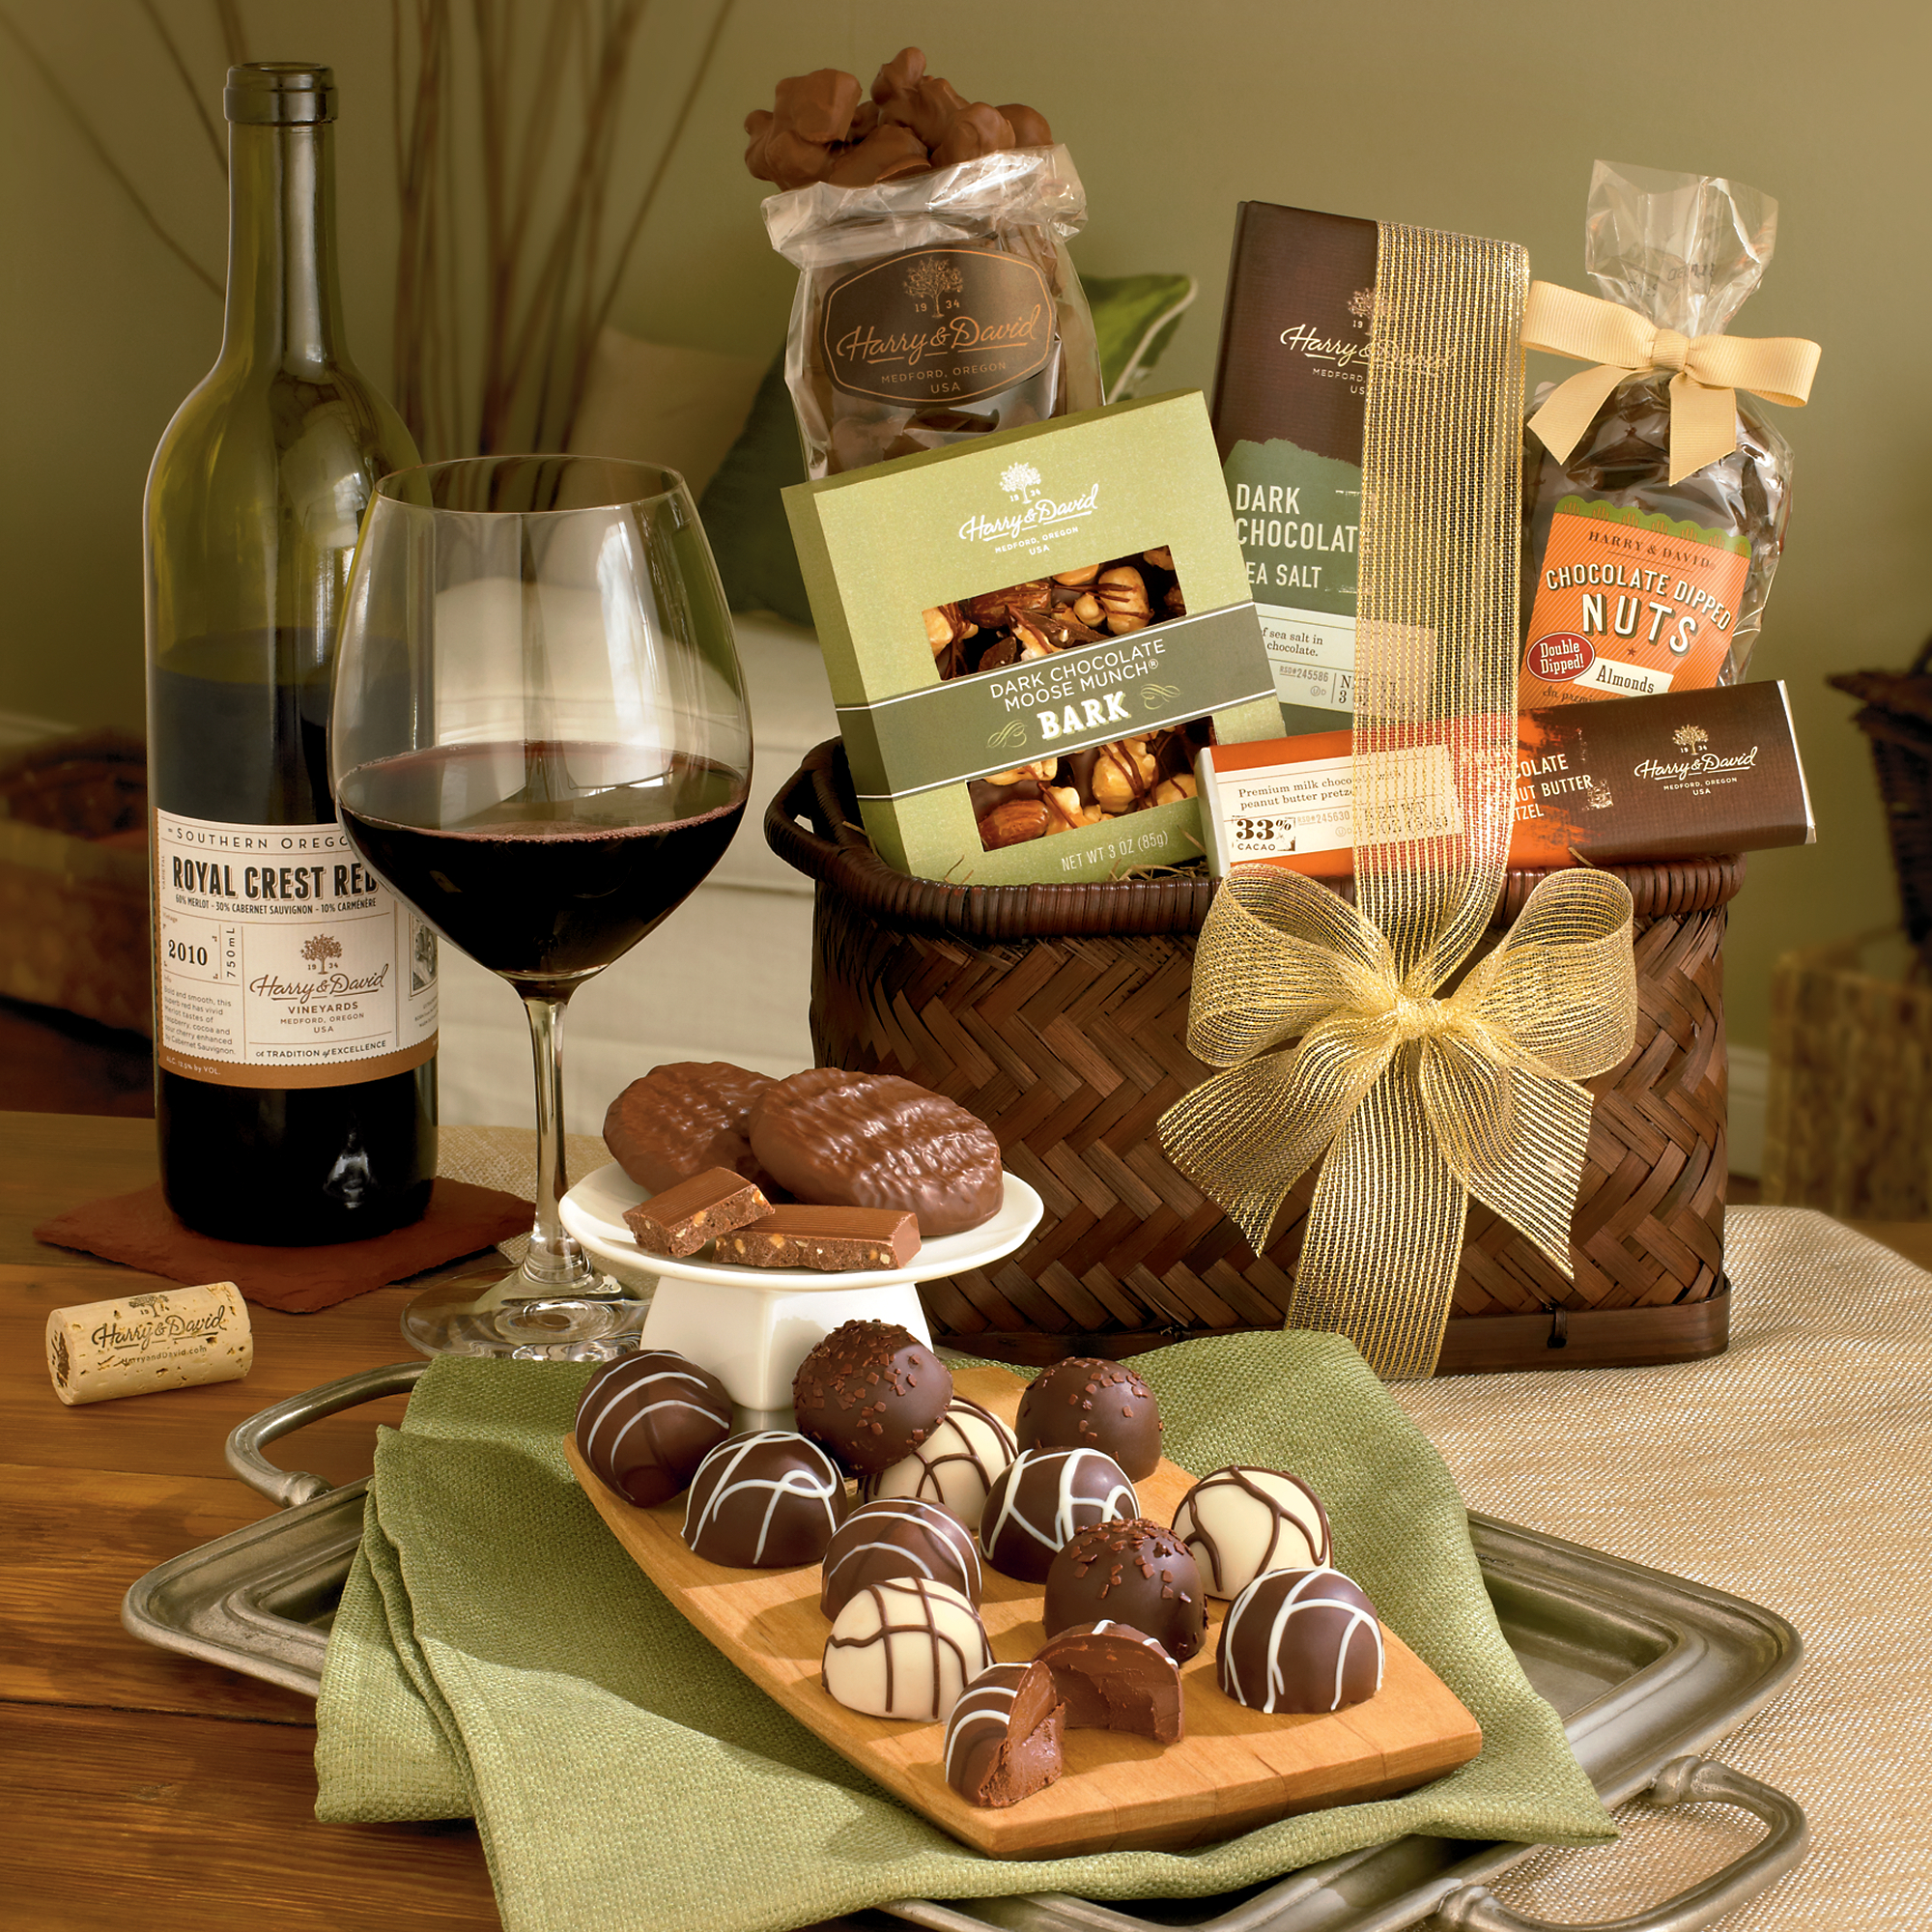 http://images.harryanddavid.com/is/image/HarryandDavid/asiHighRez/1430_27302-chocolate-gift-basket-with-wine.jpg